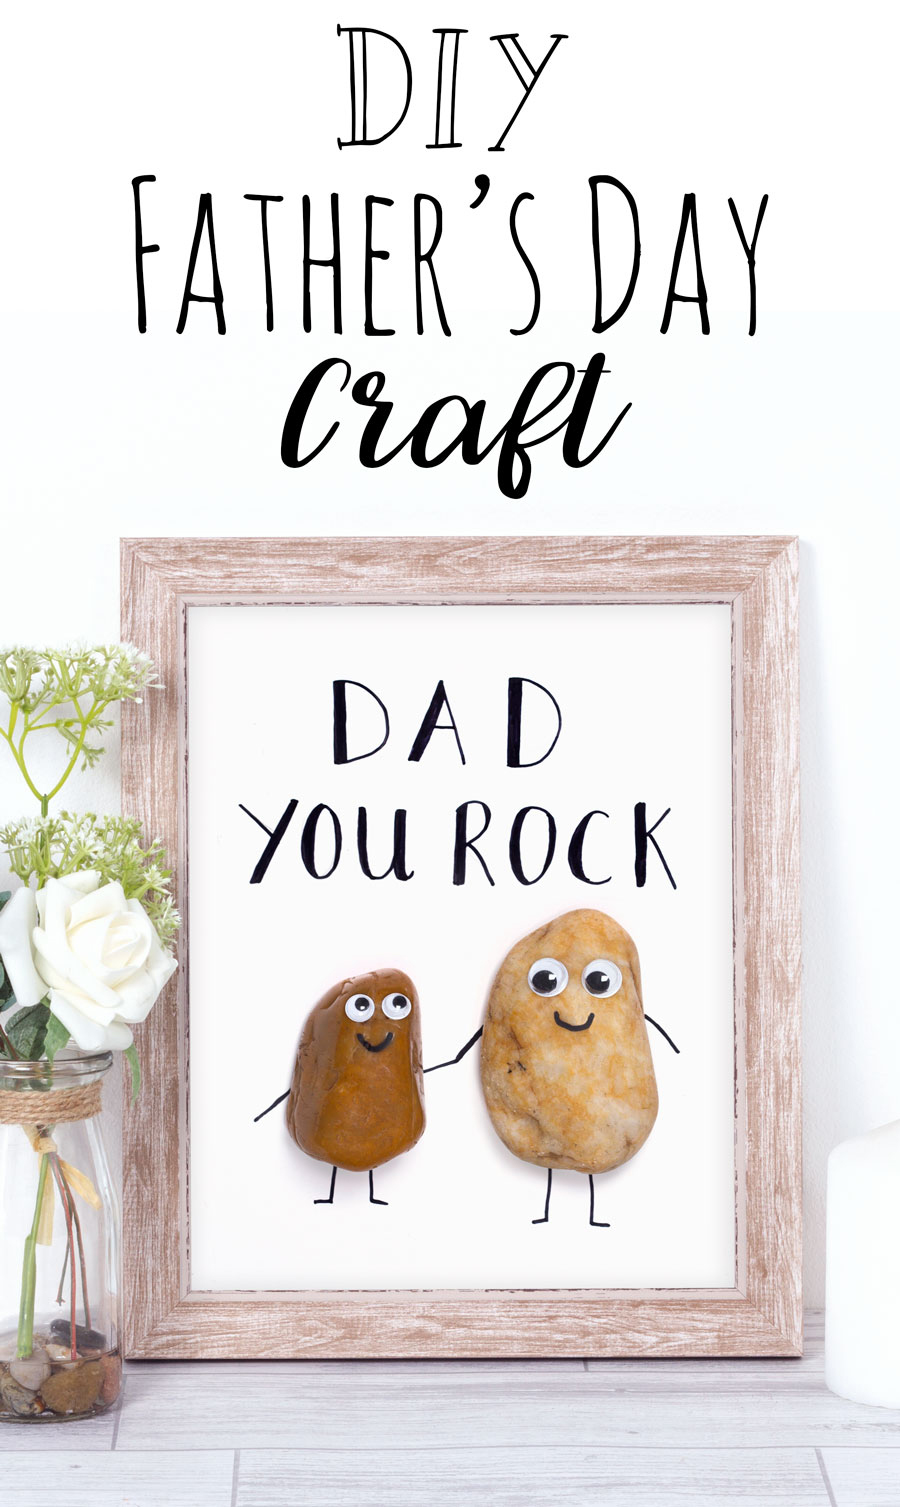 DIY Father's Day Gift Basket Filler Ideas - Savvy Saving Couple